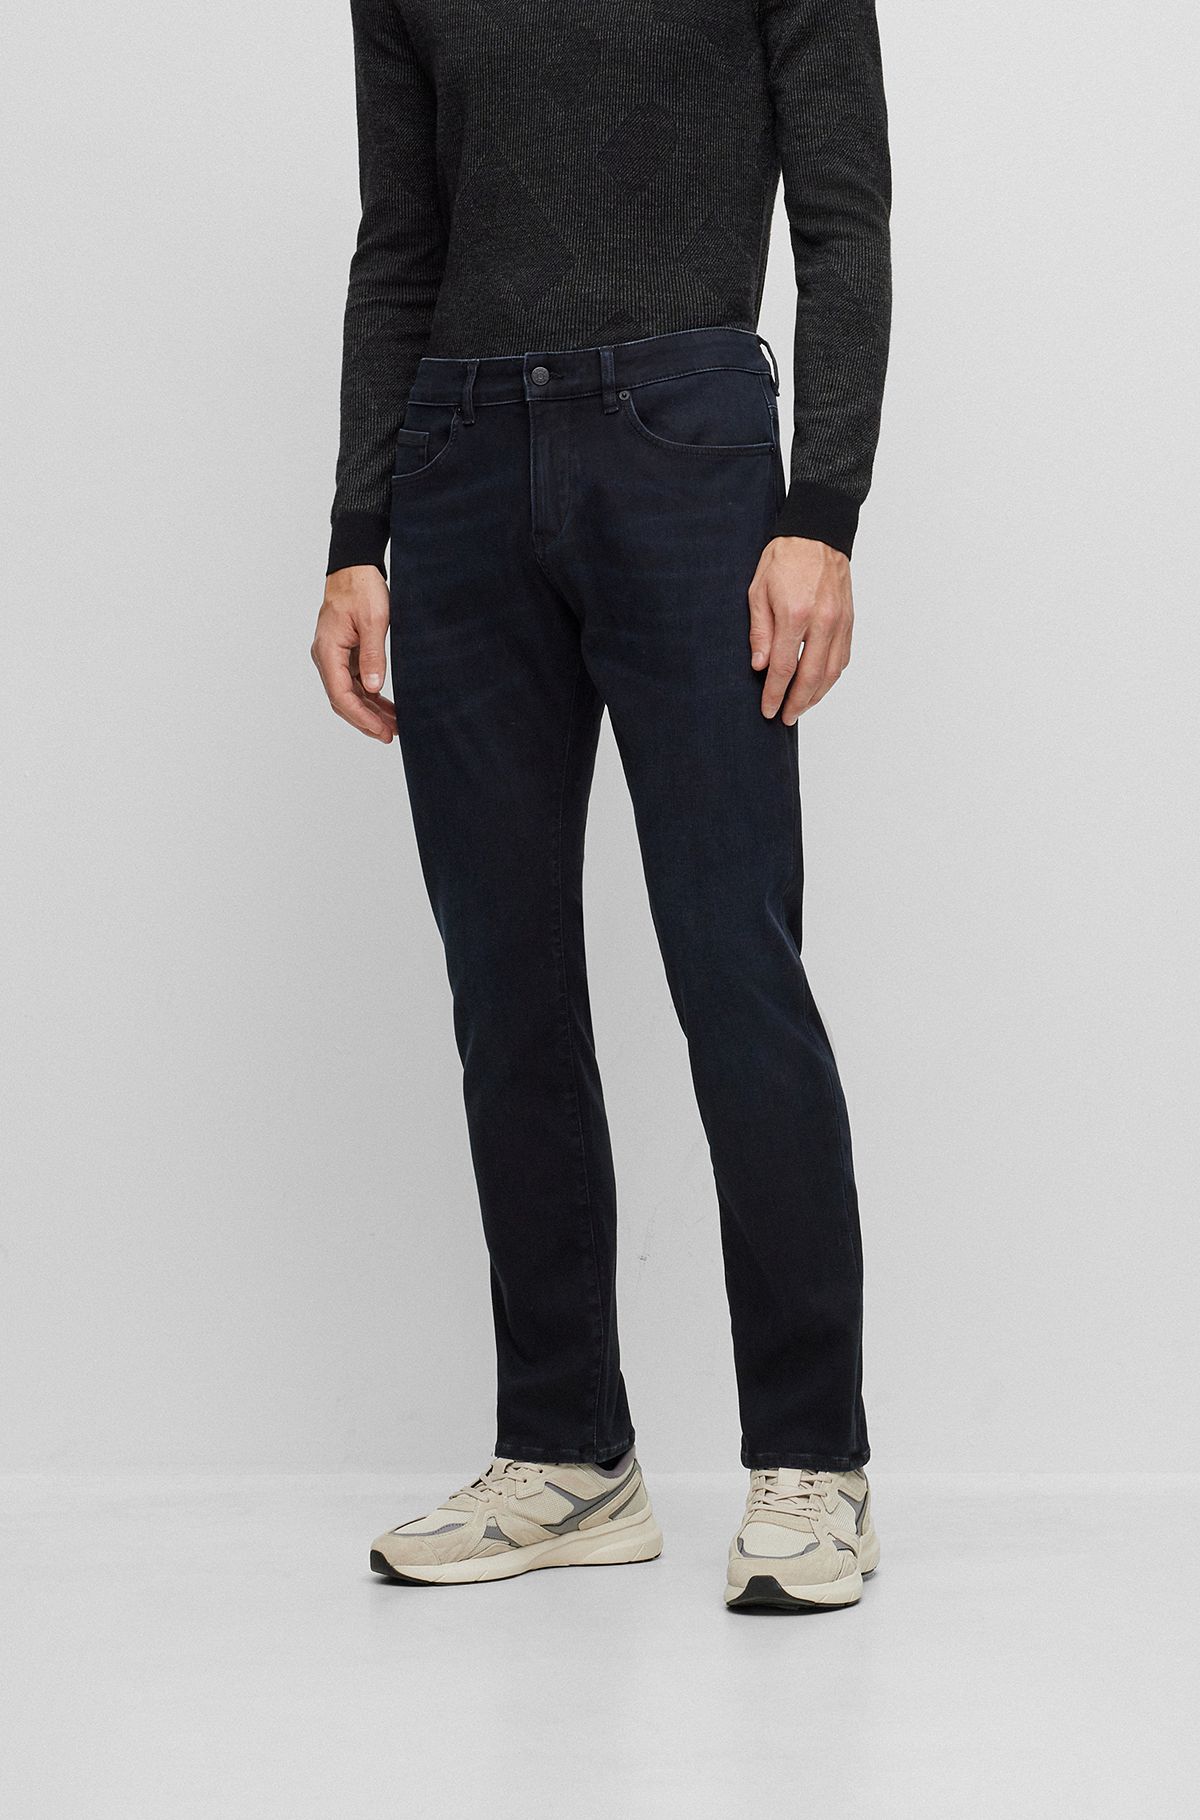 Slim-fit jeans in blue cozy-knit denim, Black